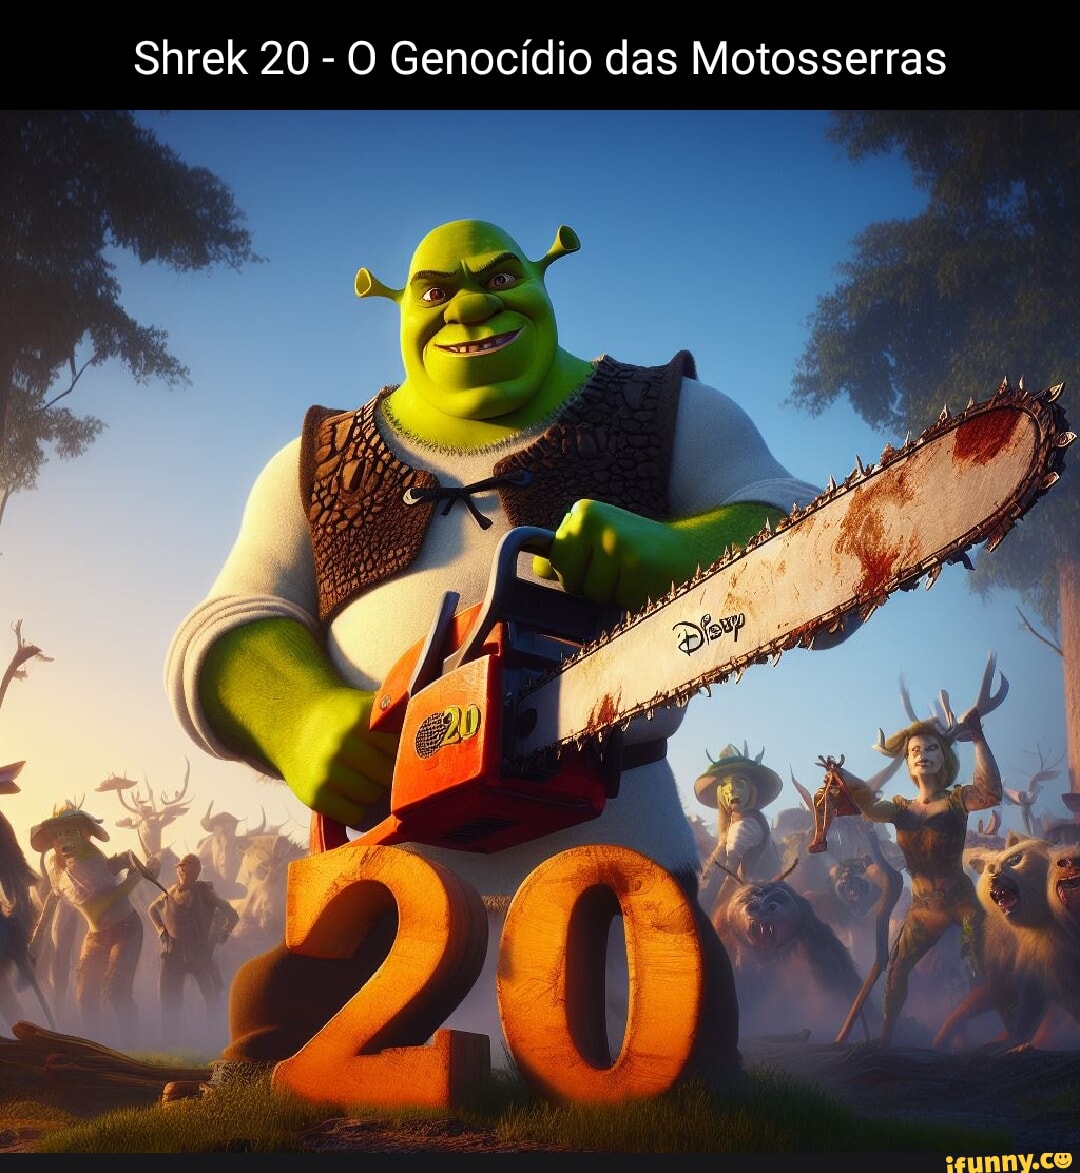 Shrek 20 - O Genocídio das Motosserras - iFunny Brazil